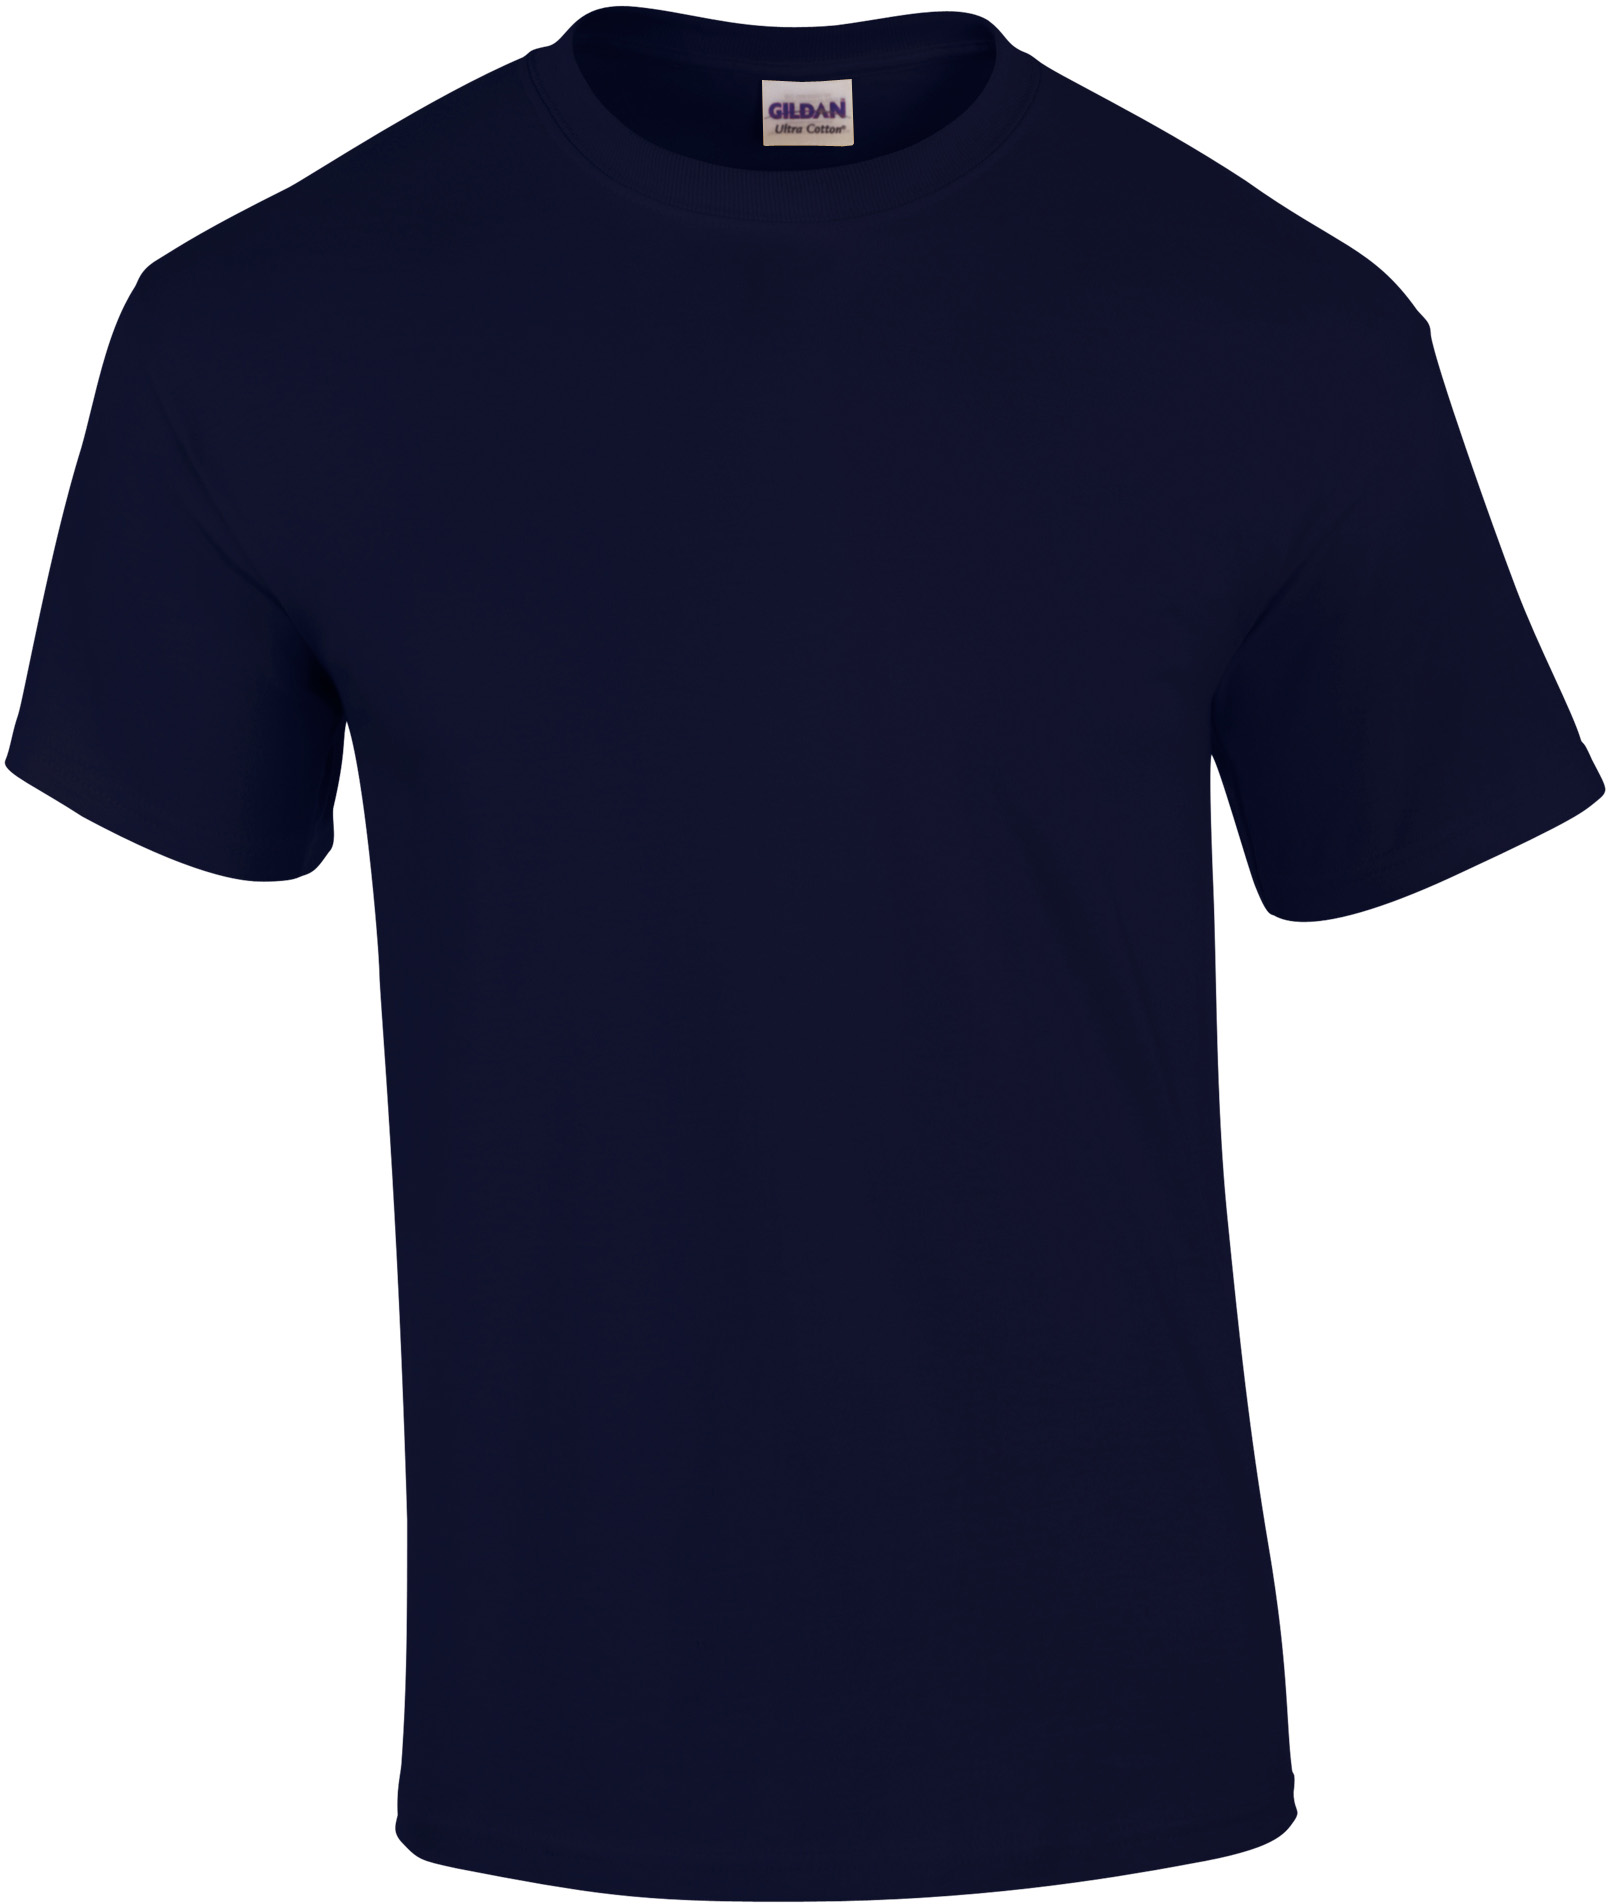 Tričko Gildan Ultra - Námořní modrá XL